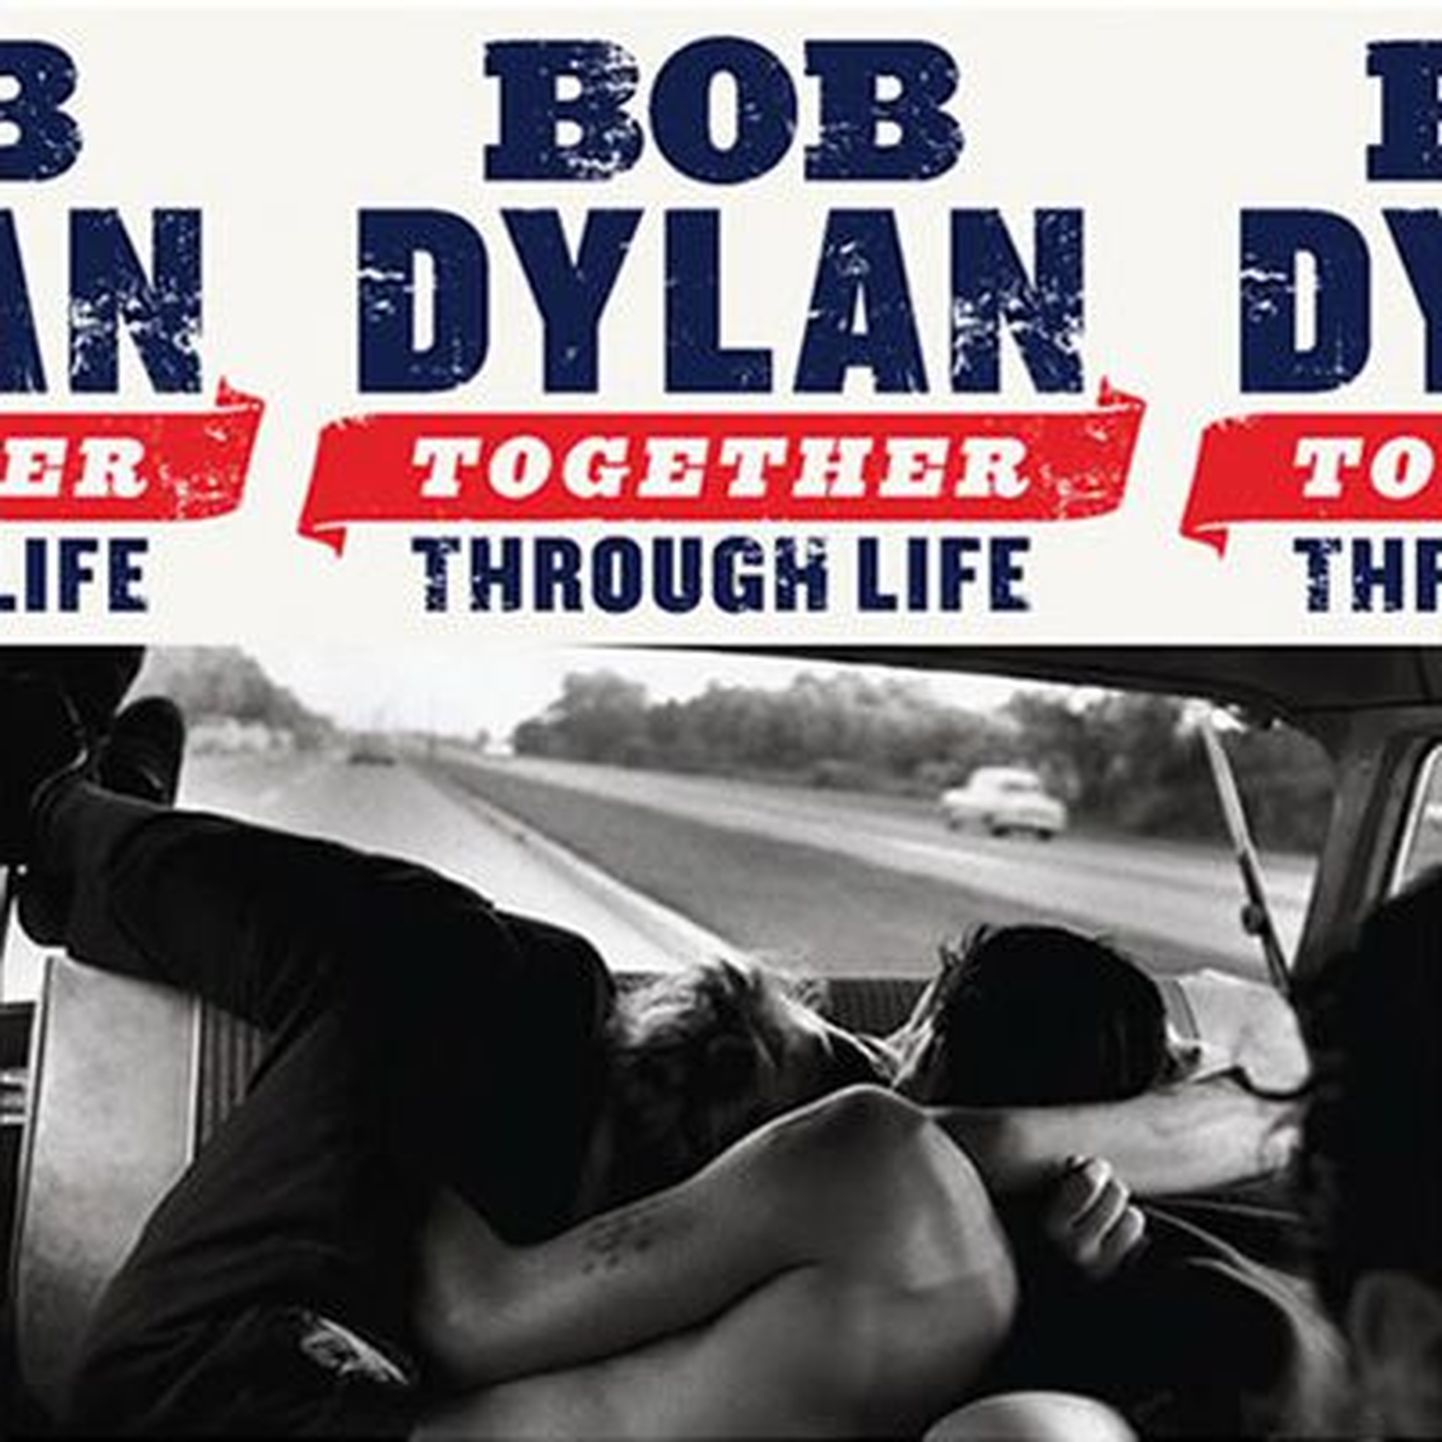 Bob Dylan “Together Through Life”.